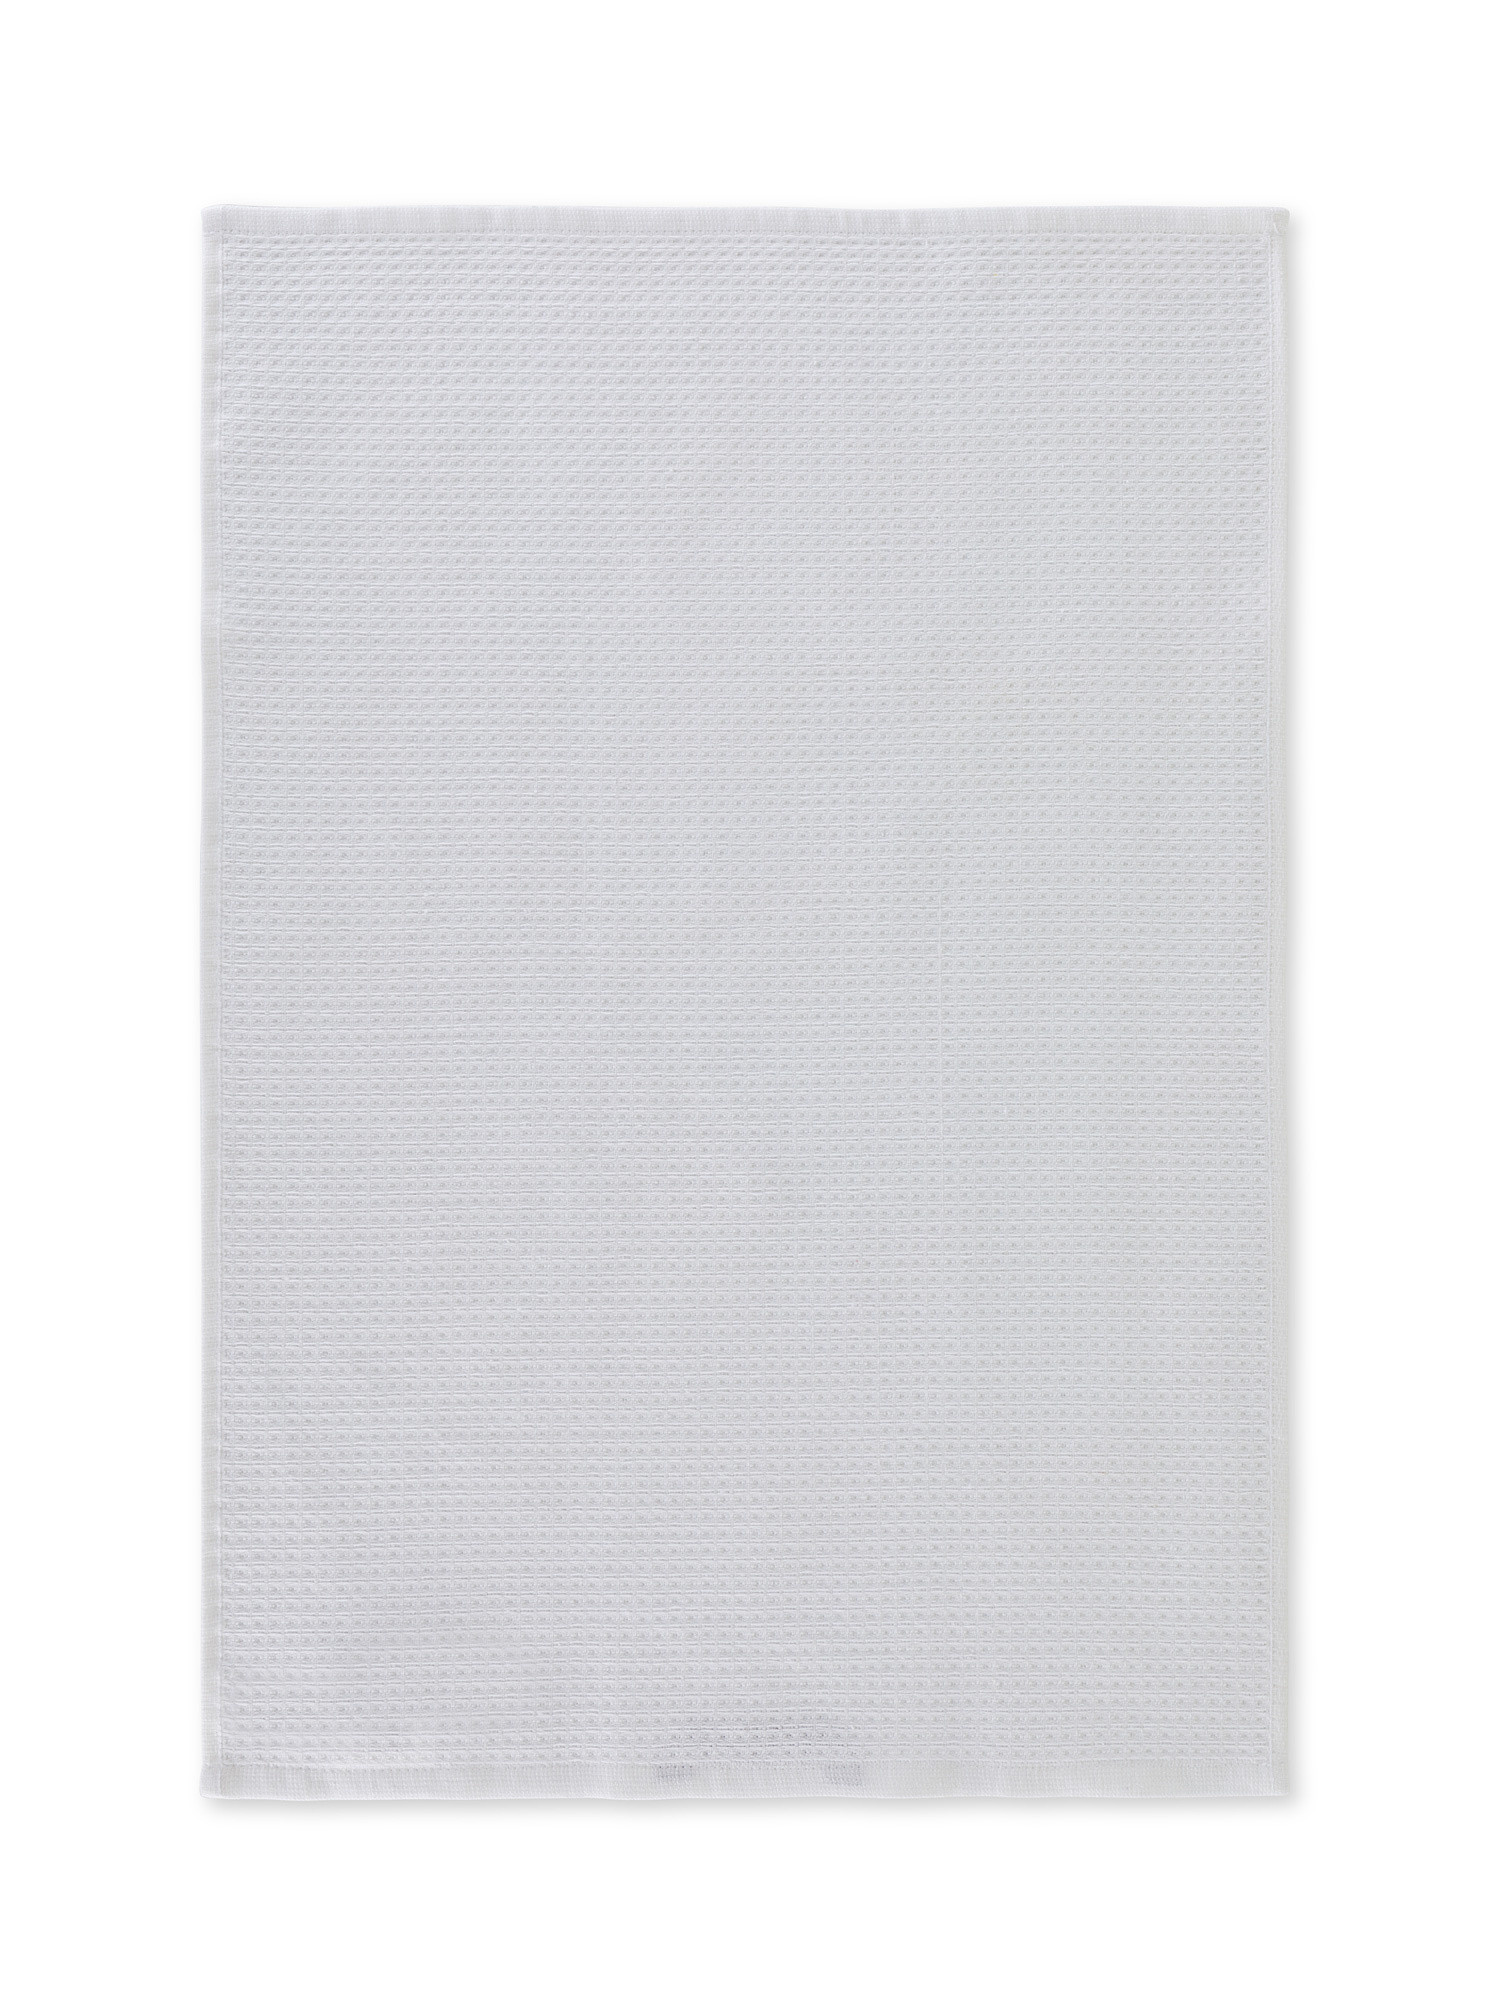 Set of 3 plain color cotton terry cloths, White, large image number 1